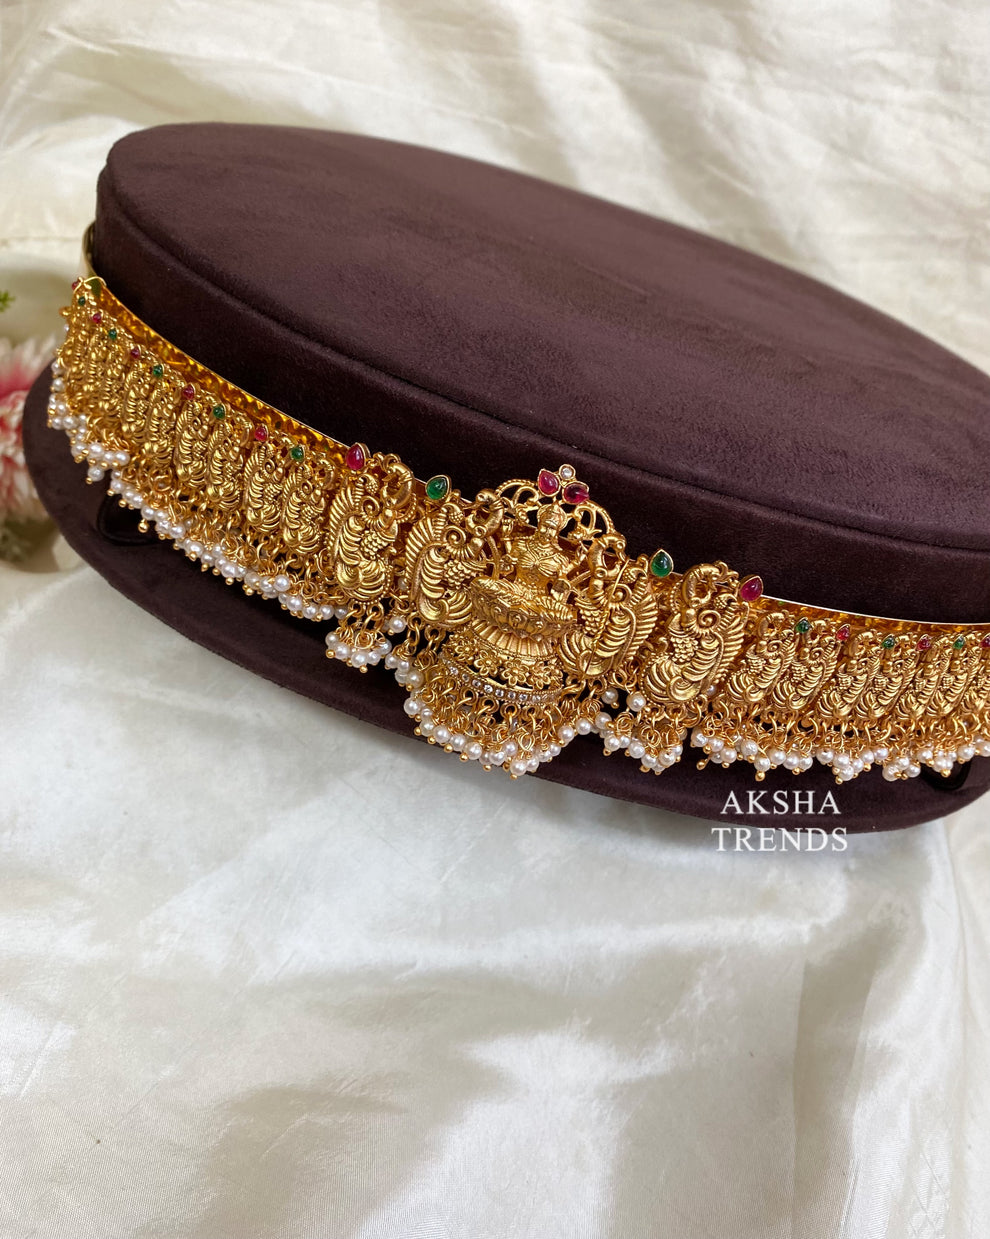 Lakshmi hip belt with pearl beads Aksha Trends 